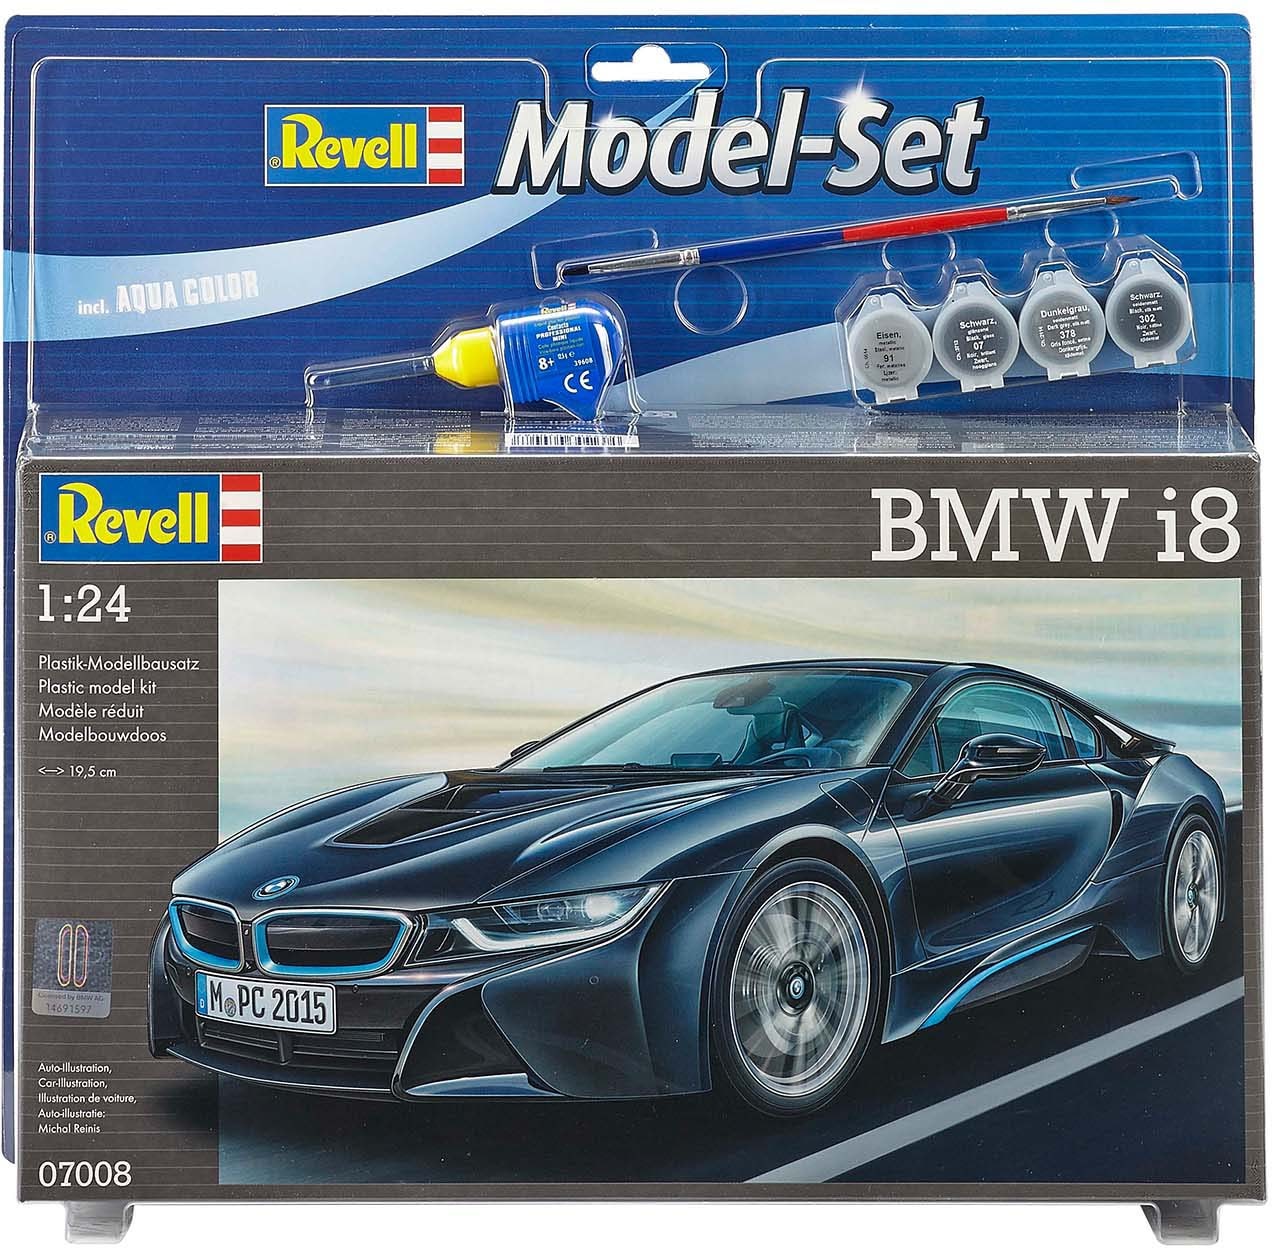 Modellbausatz »Model Set BMW i8«, 1:24, Made in Europe